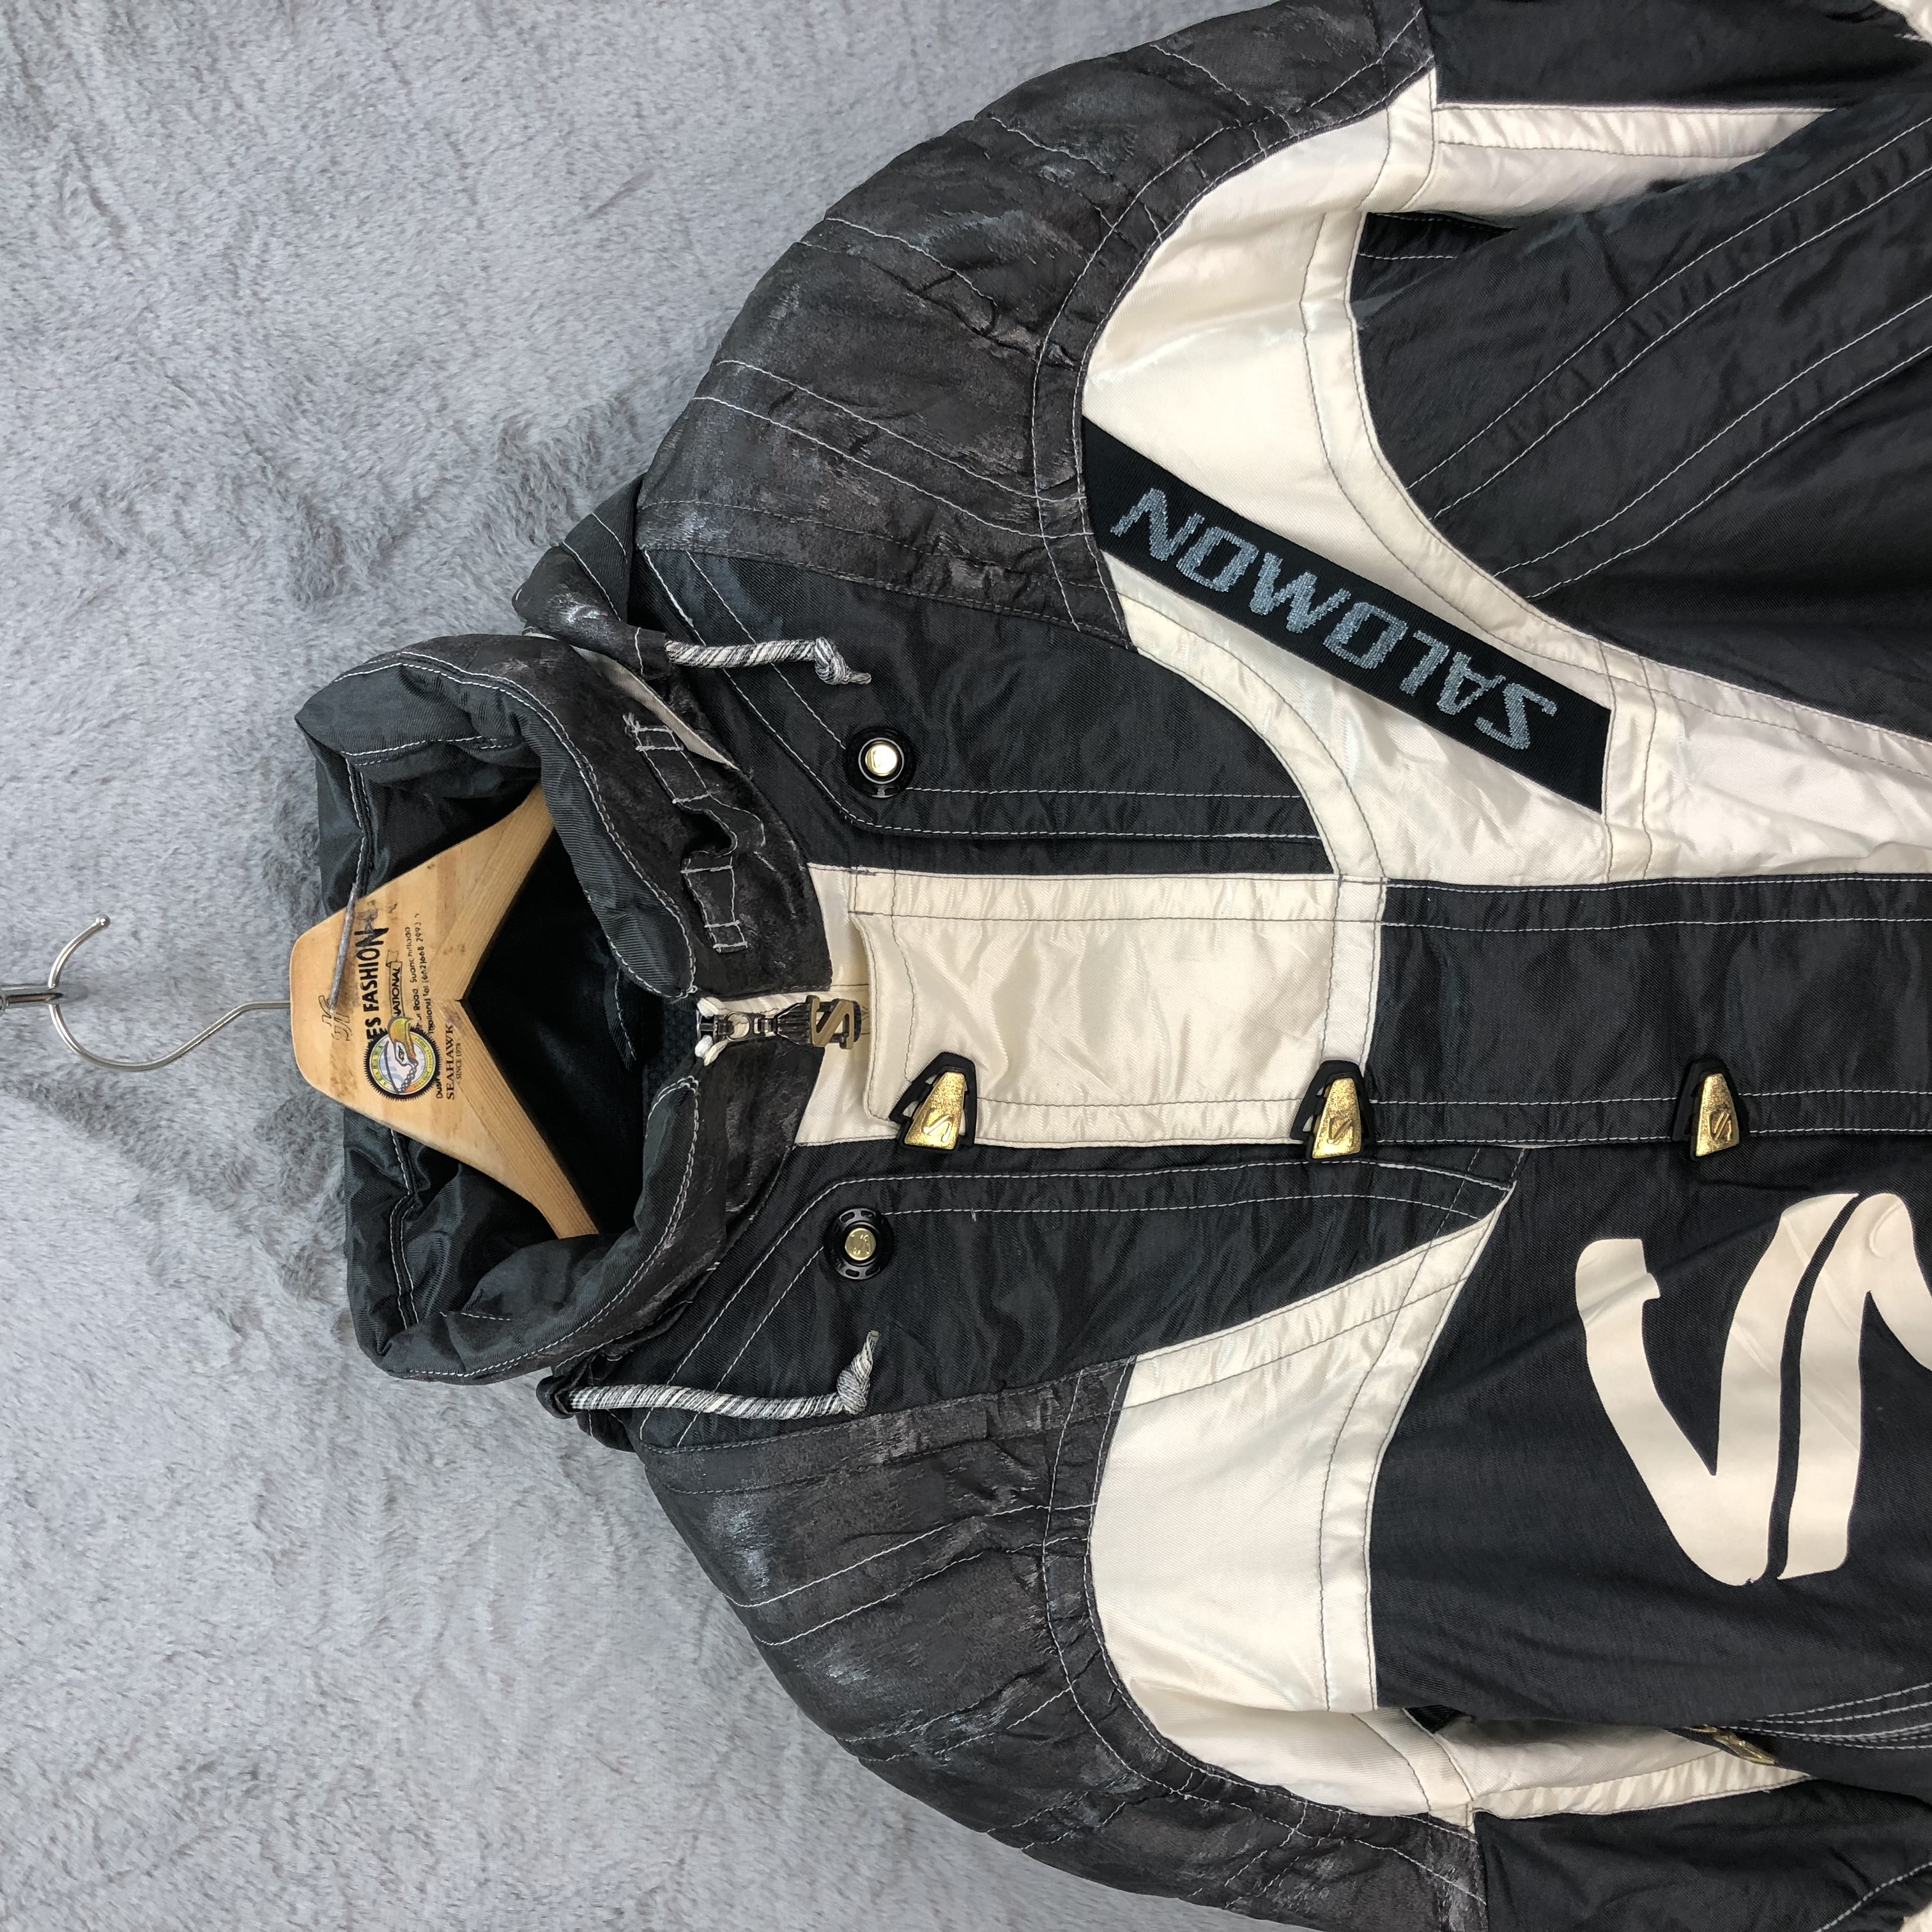 SALOMON Hooded Ski Jacket Skiwear #5164-177 - 2